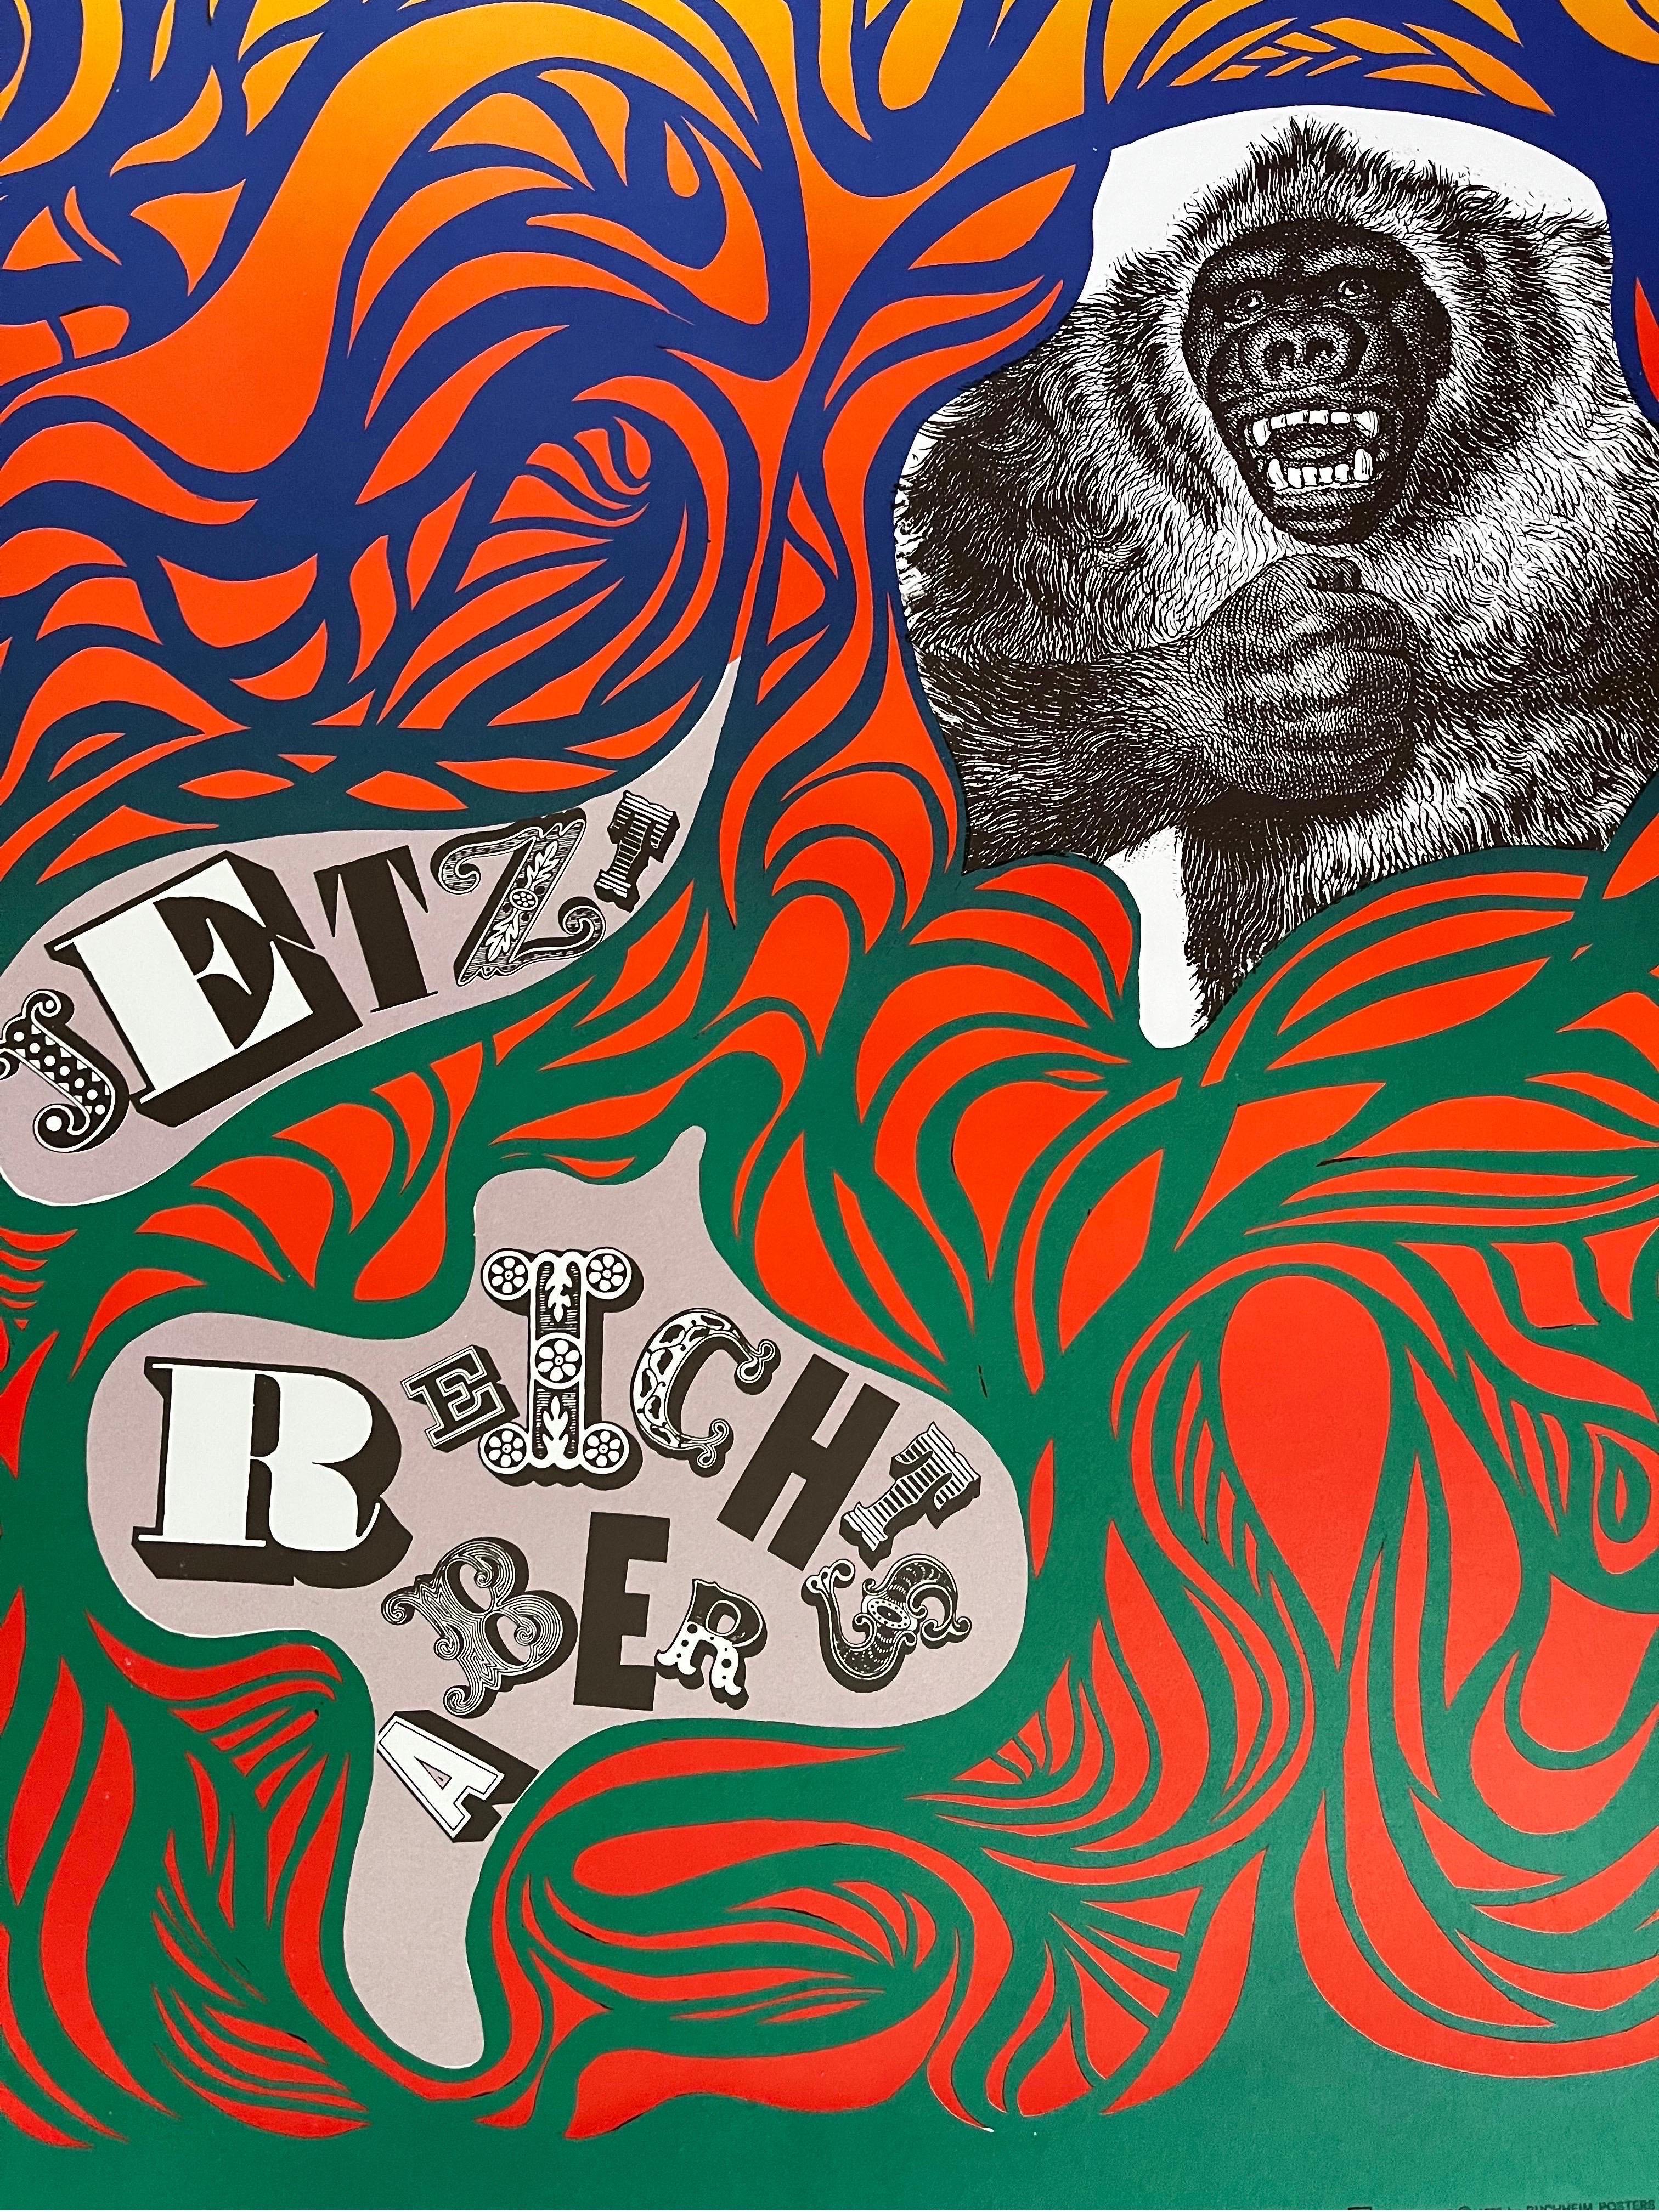 Vintage Mid Century Modern Psychedelic Pop Art Poster
